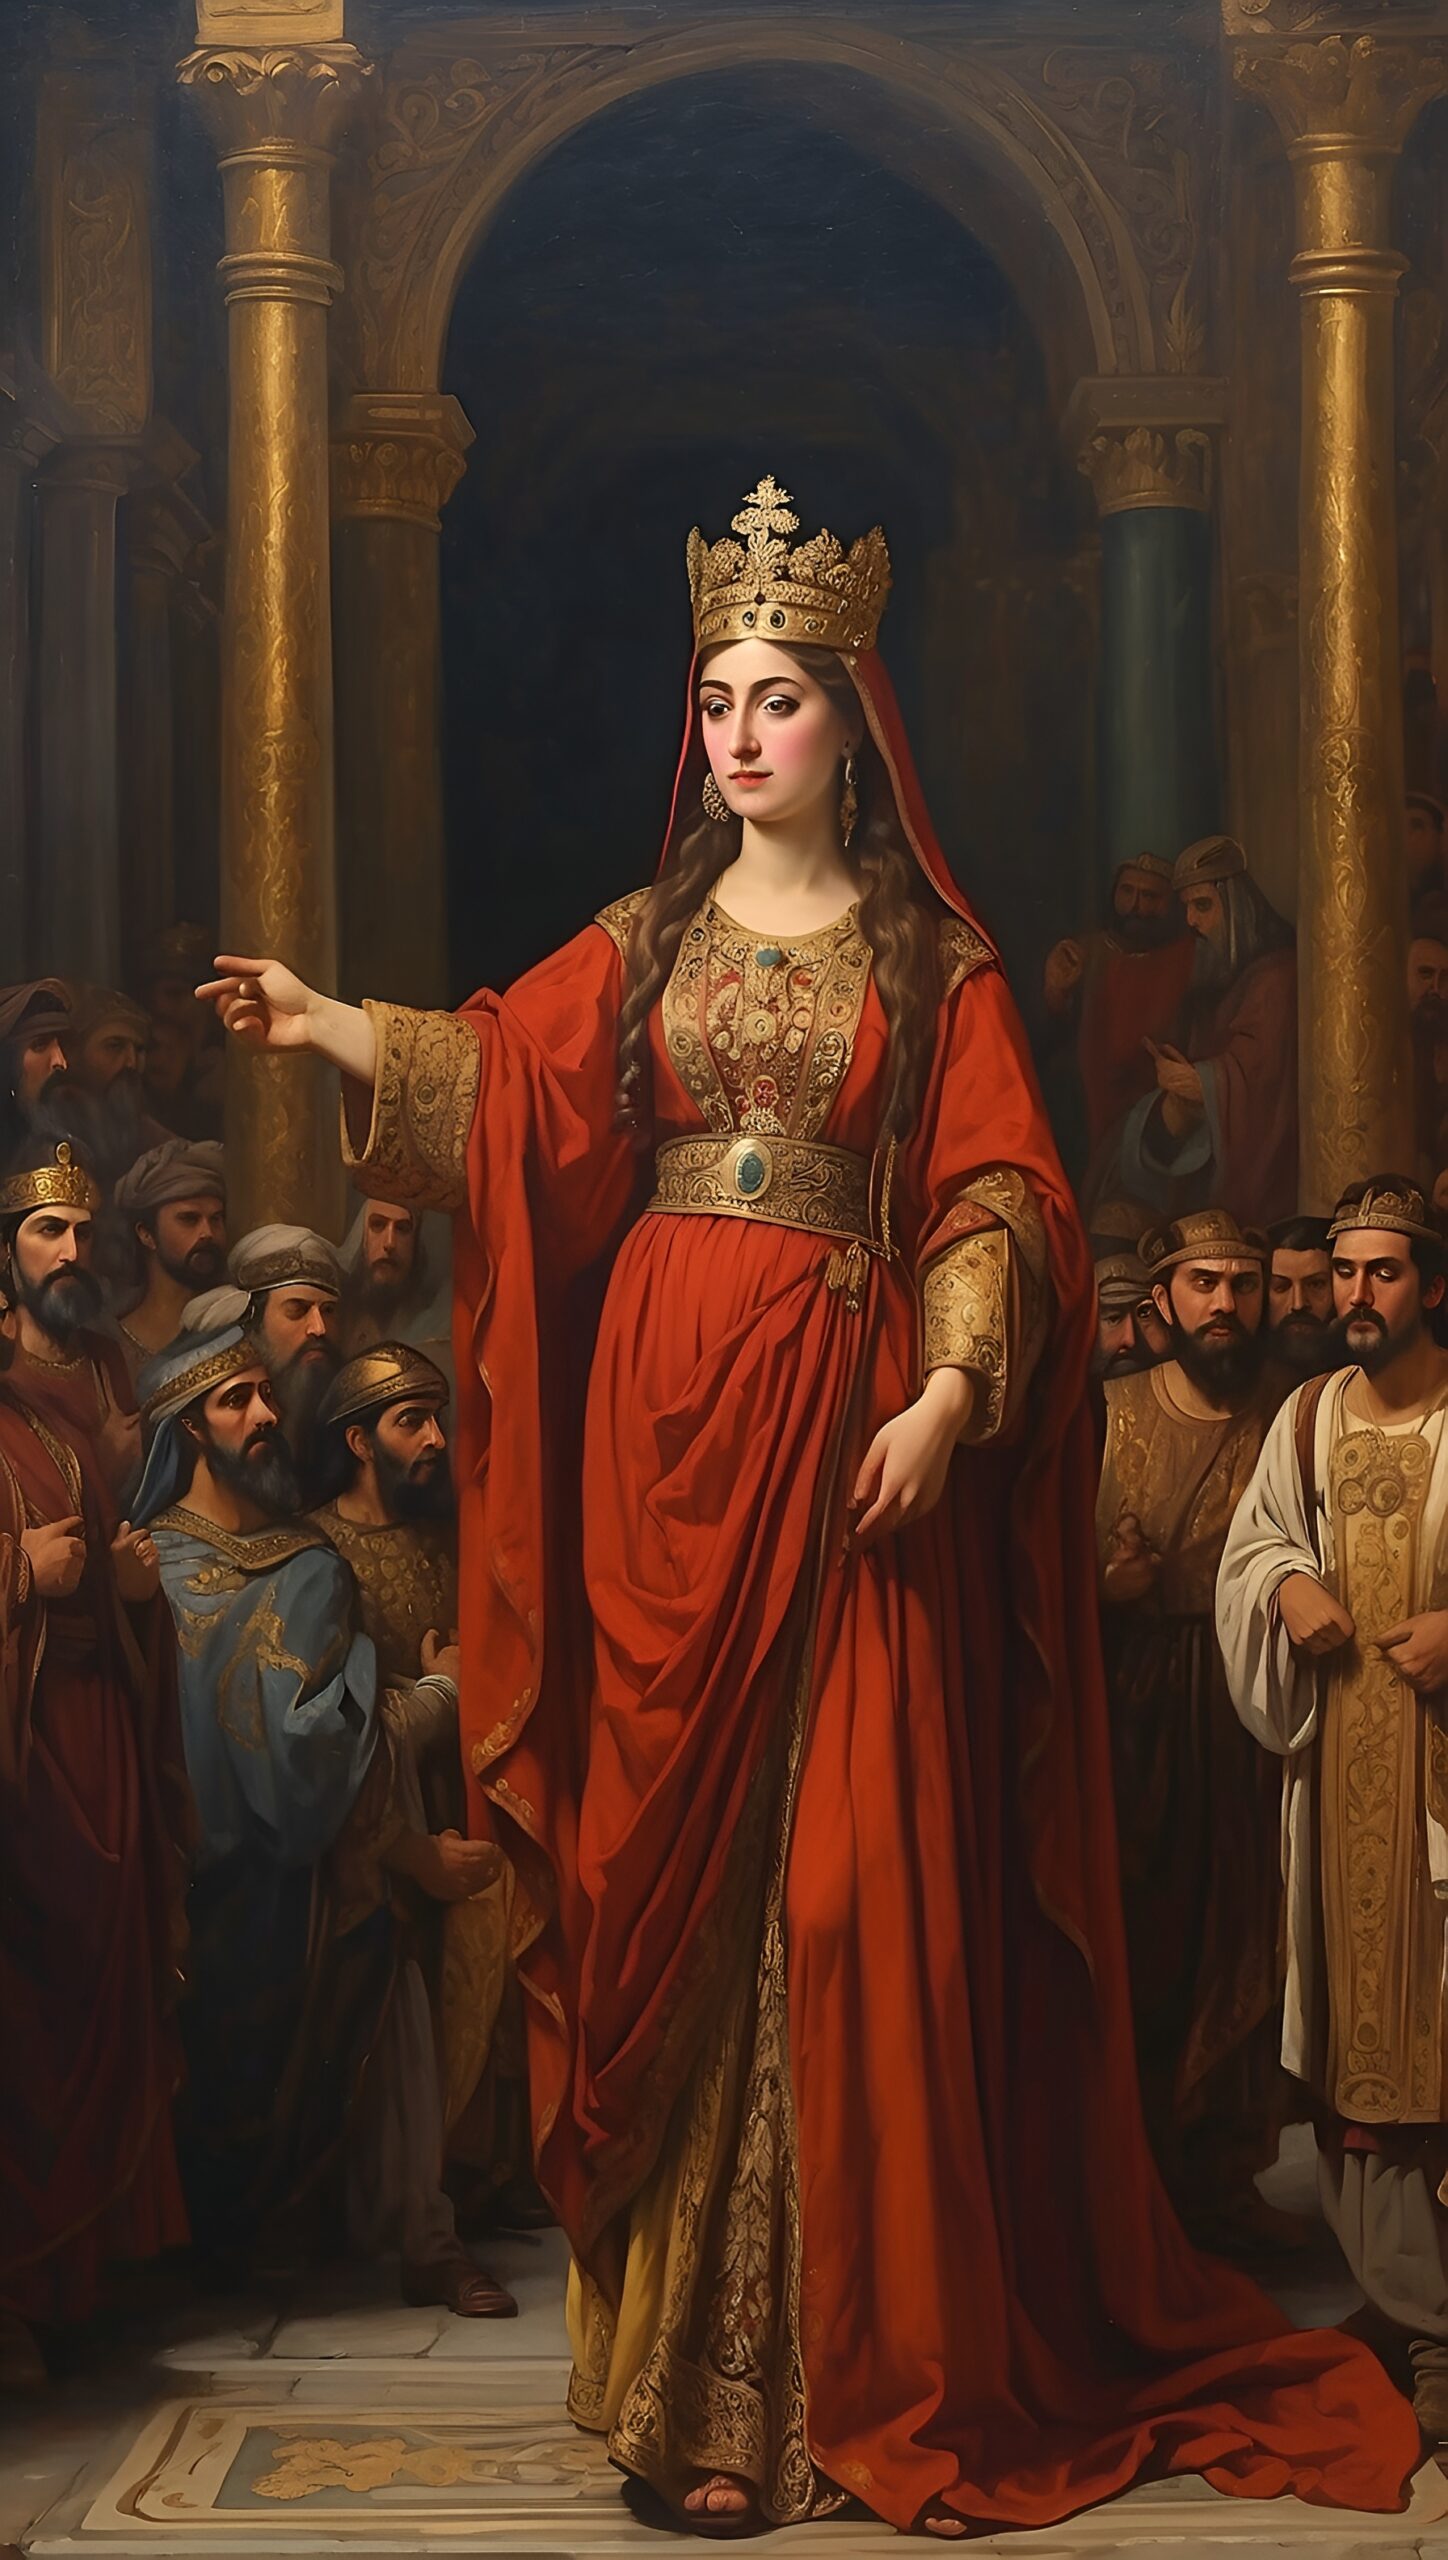 Default Theodora of Byzantium plays theater on a stage in the 0 b4b52c6b 398f 4339 bb28 7648052b1571 0